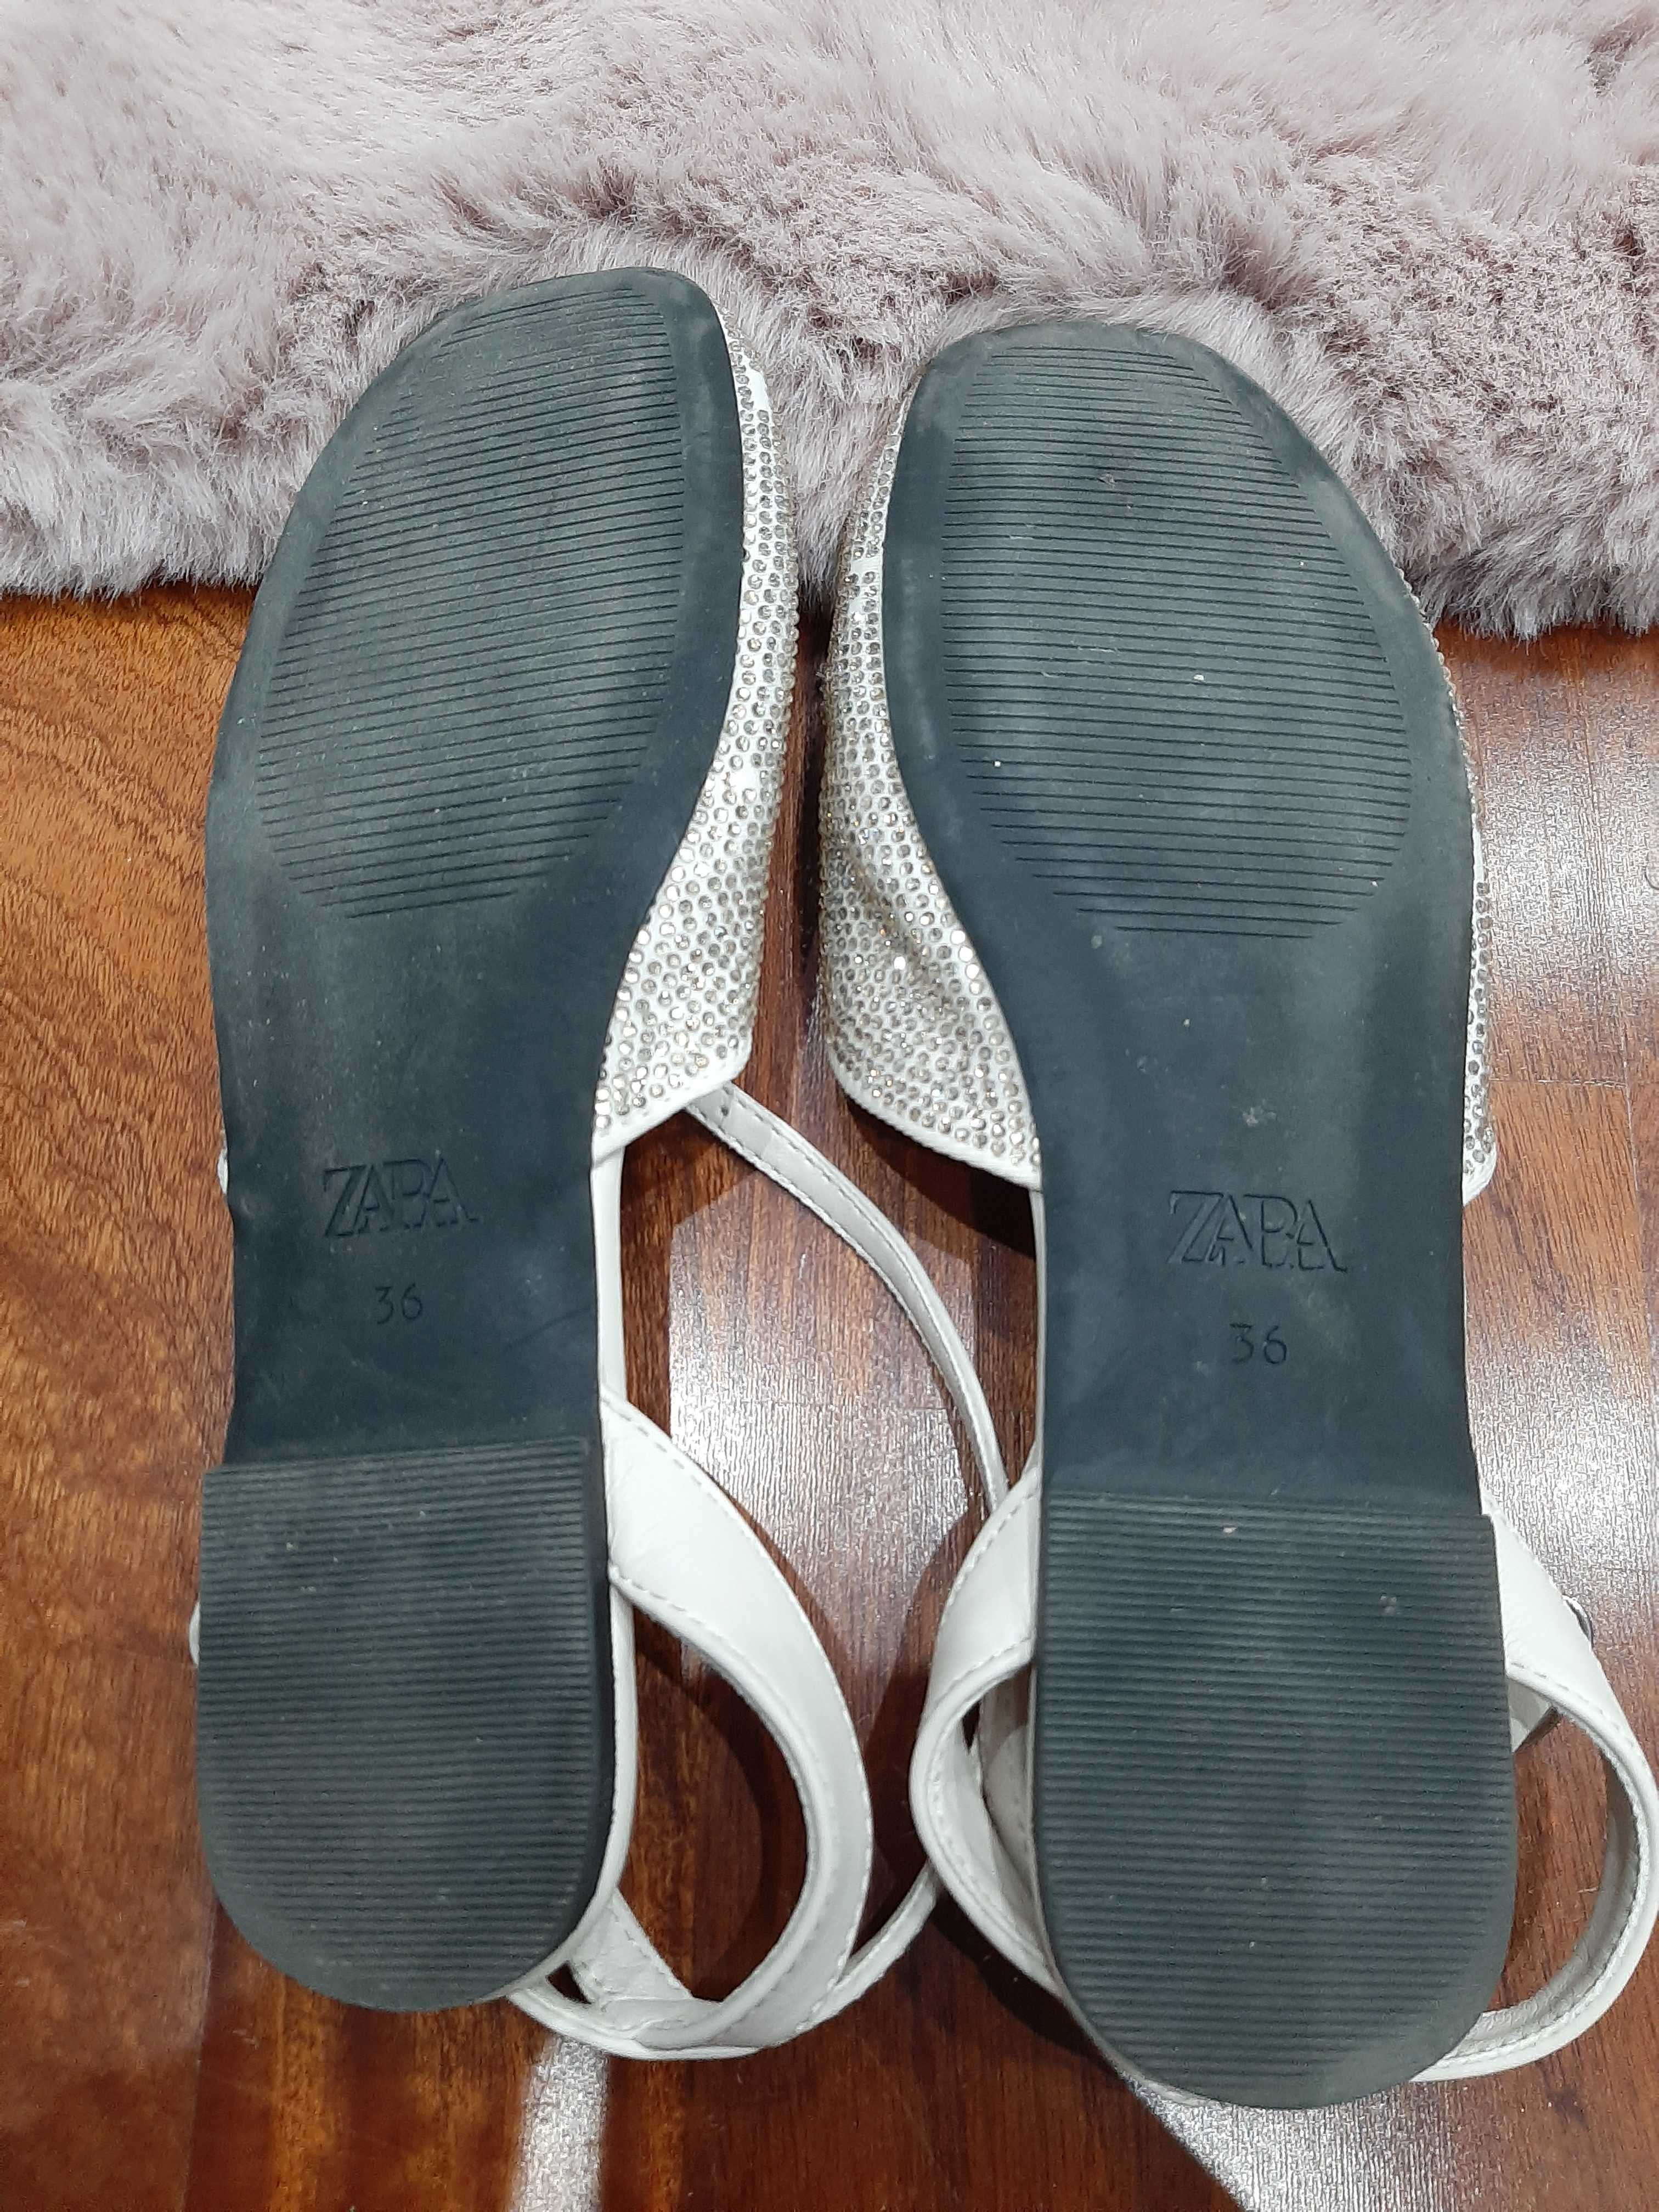 Vand sandale elegante, Zara, 36